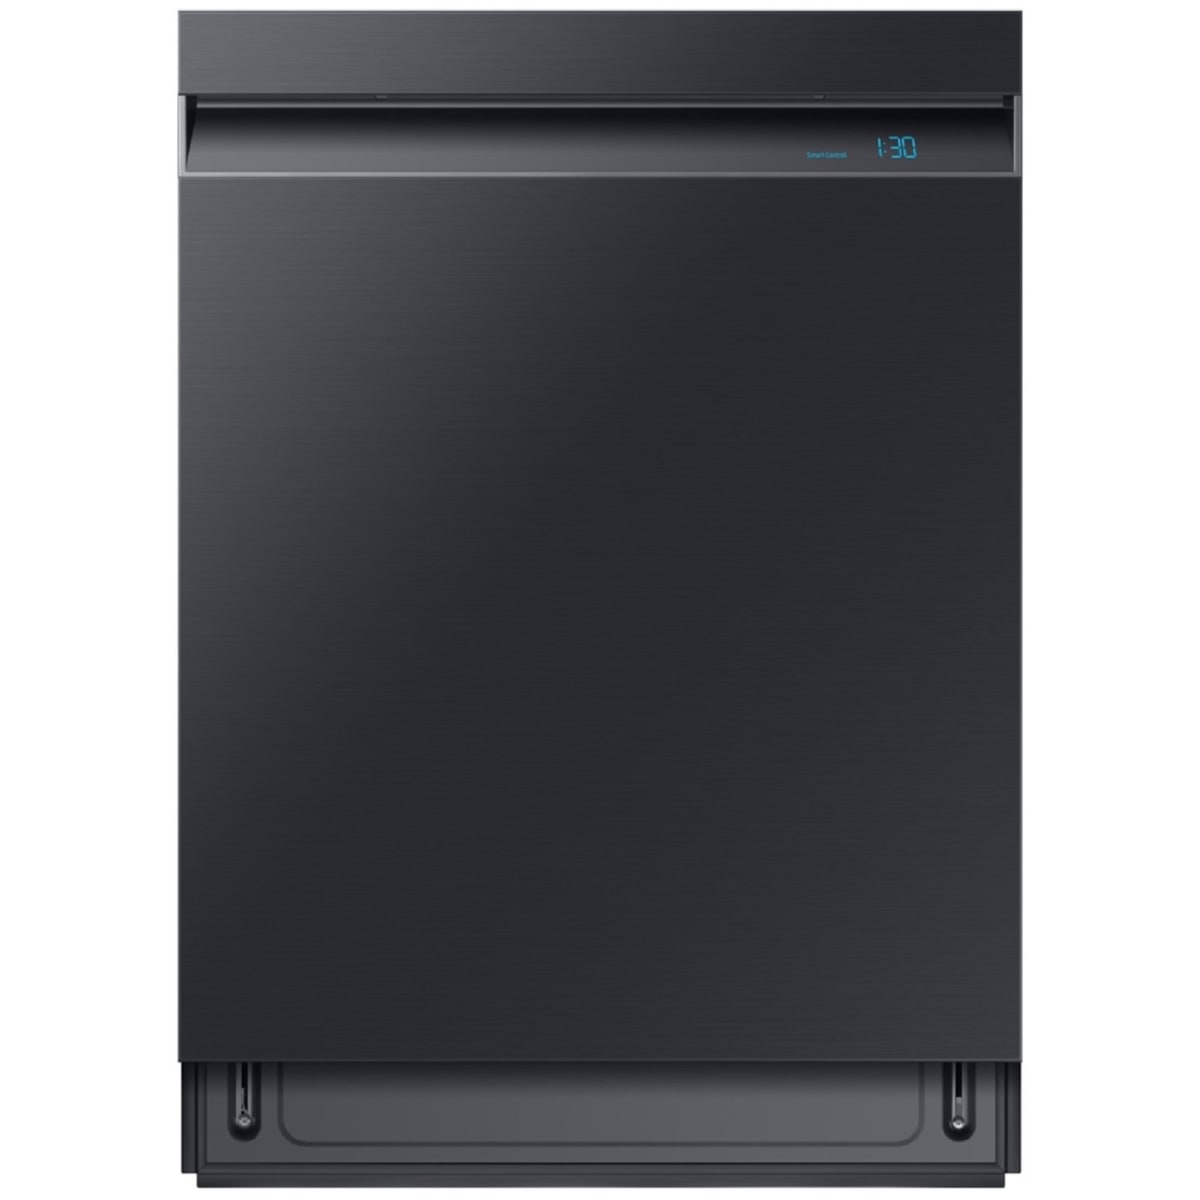 Samsung Dishwashers Sanitation and Waste Appliances - DW80R9950